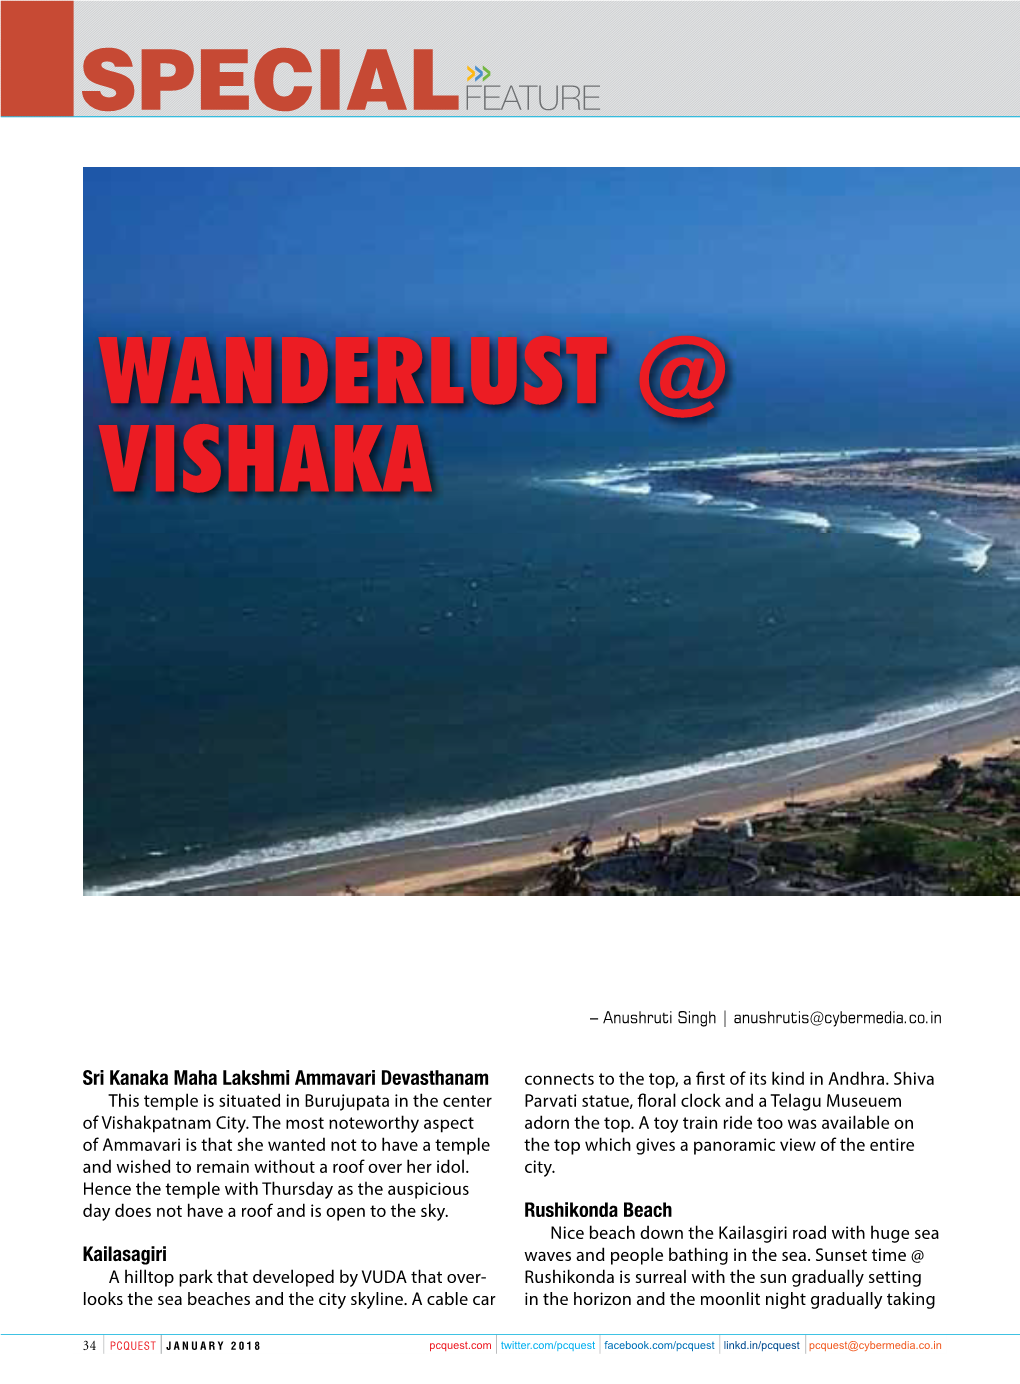 Wanderlust @ Vishaka